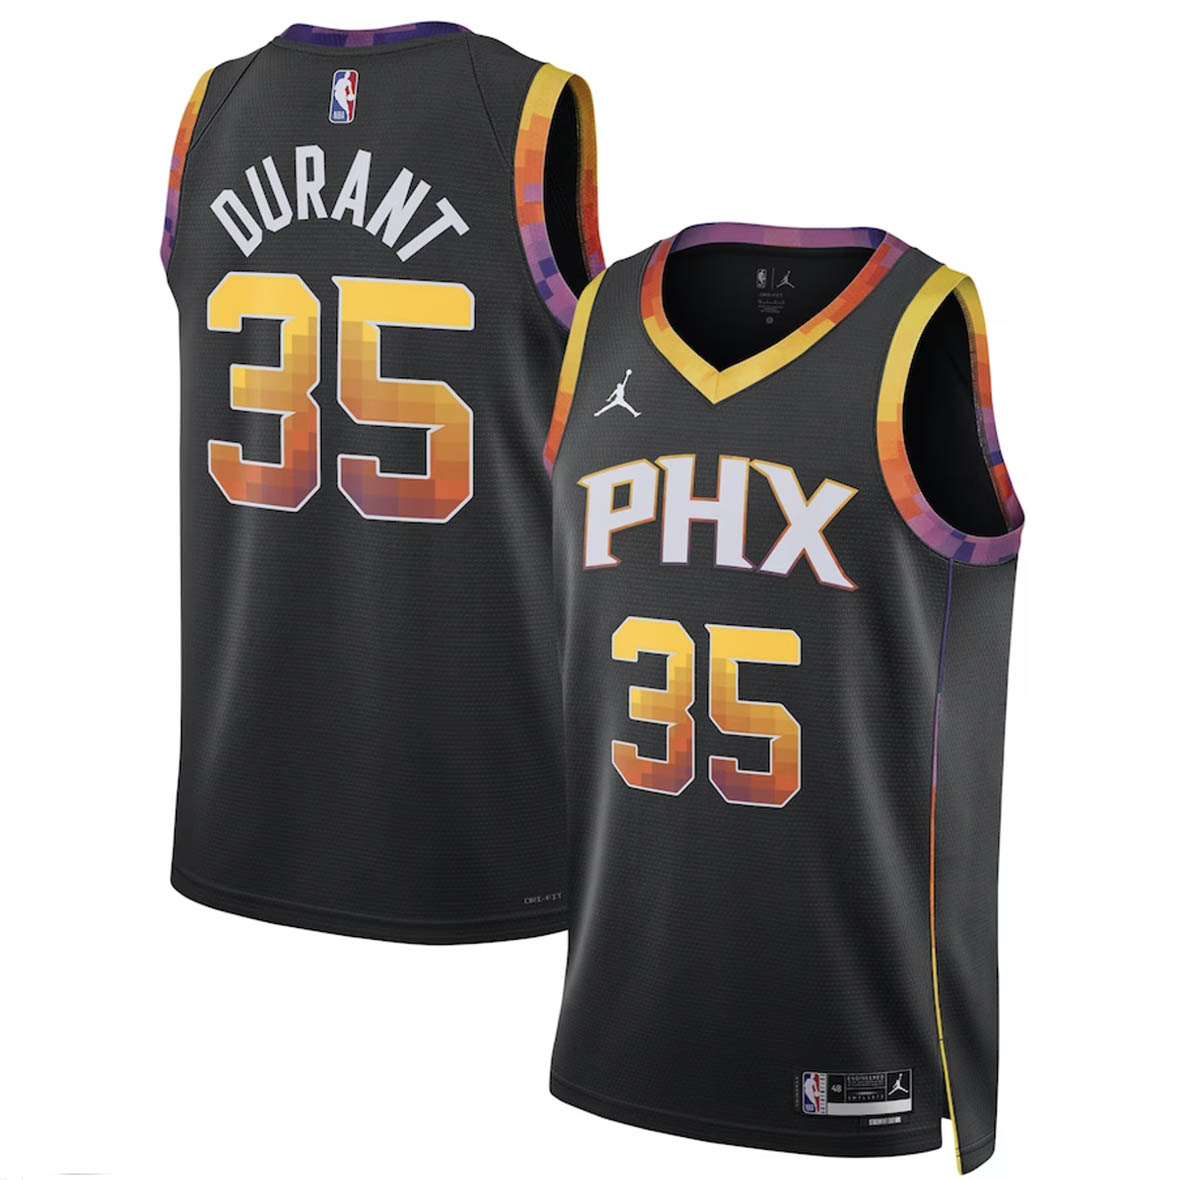 Kevin-Durant-Phoenix-Suns-Jordan-Jersey